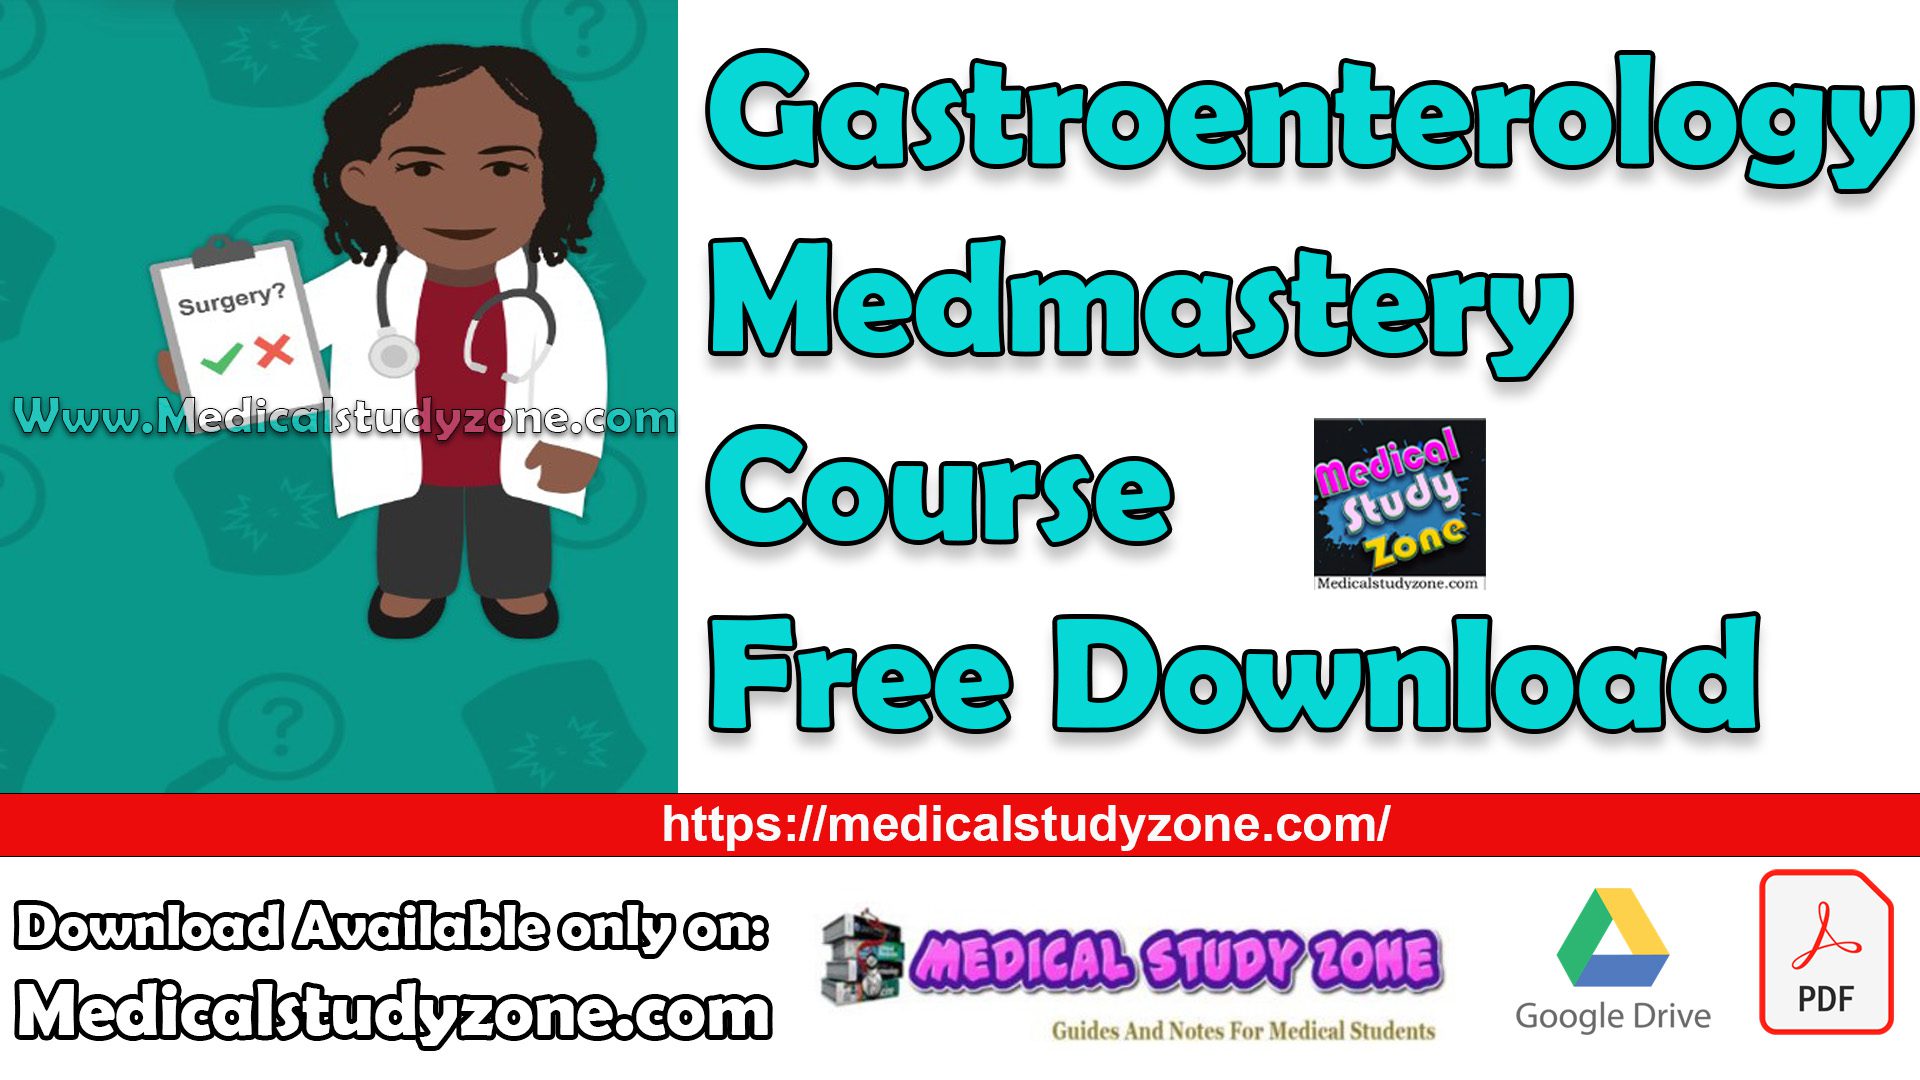 Gastroenterology Medmastery Course Free Download